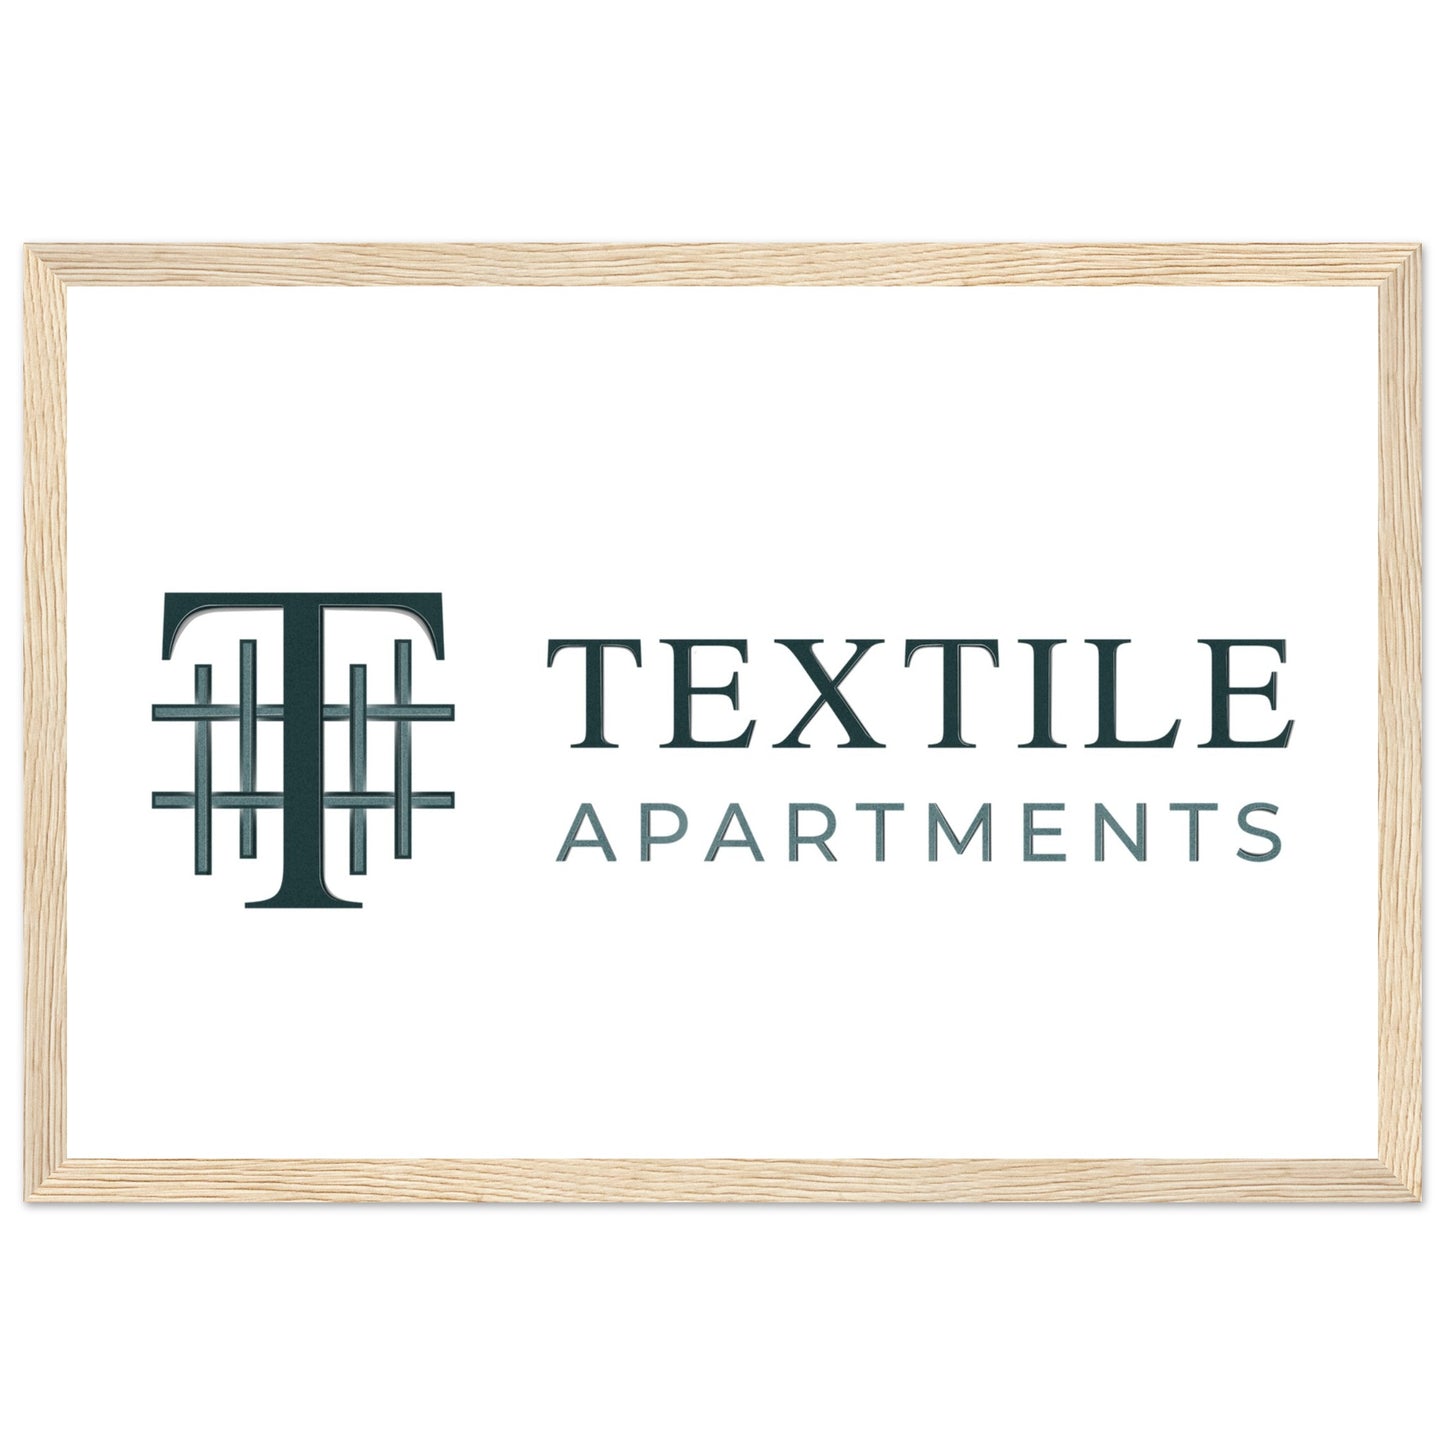 Textile Apartments - Premium Matte Paper Wooden Framed Poster